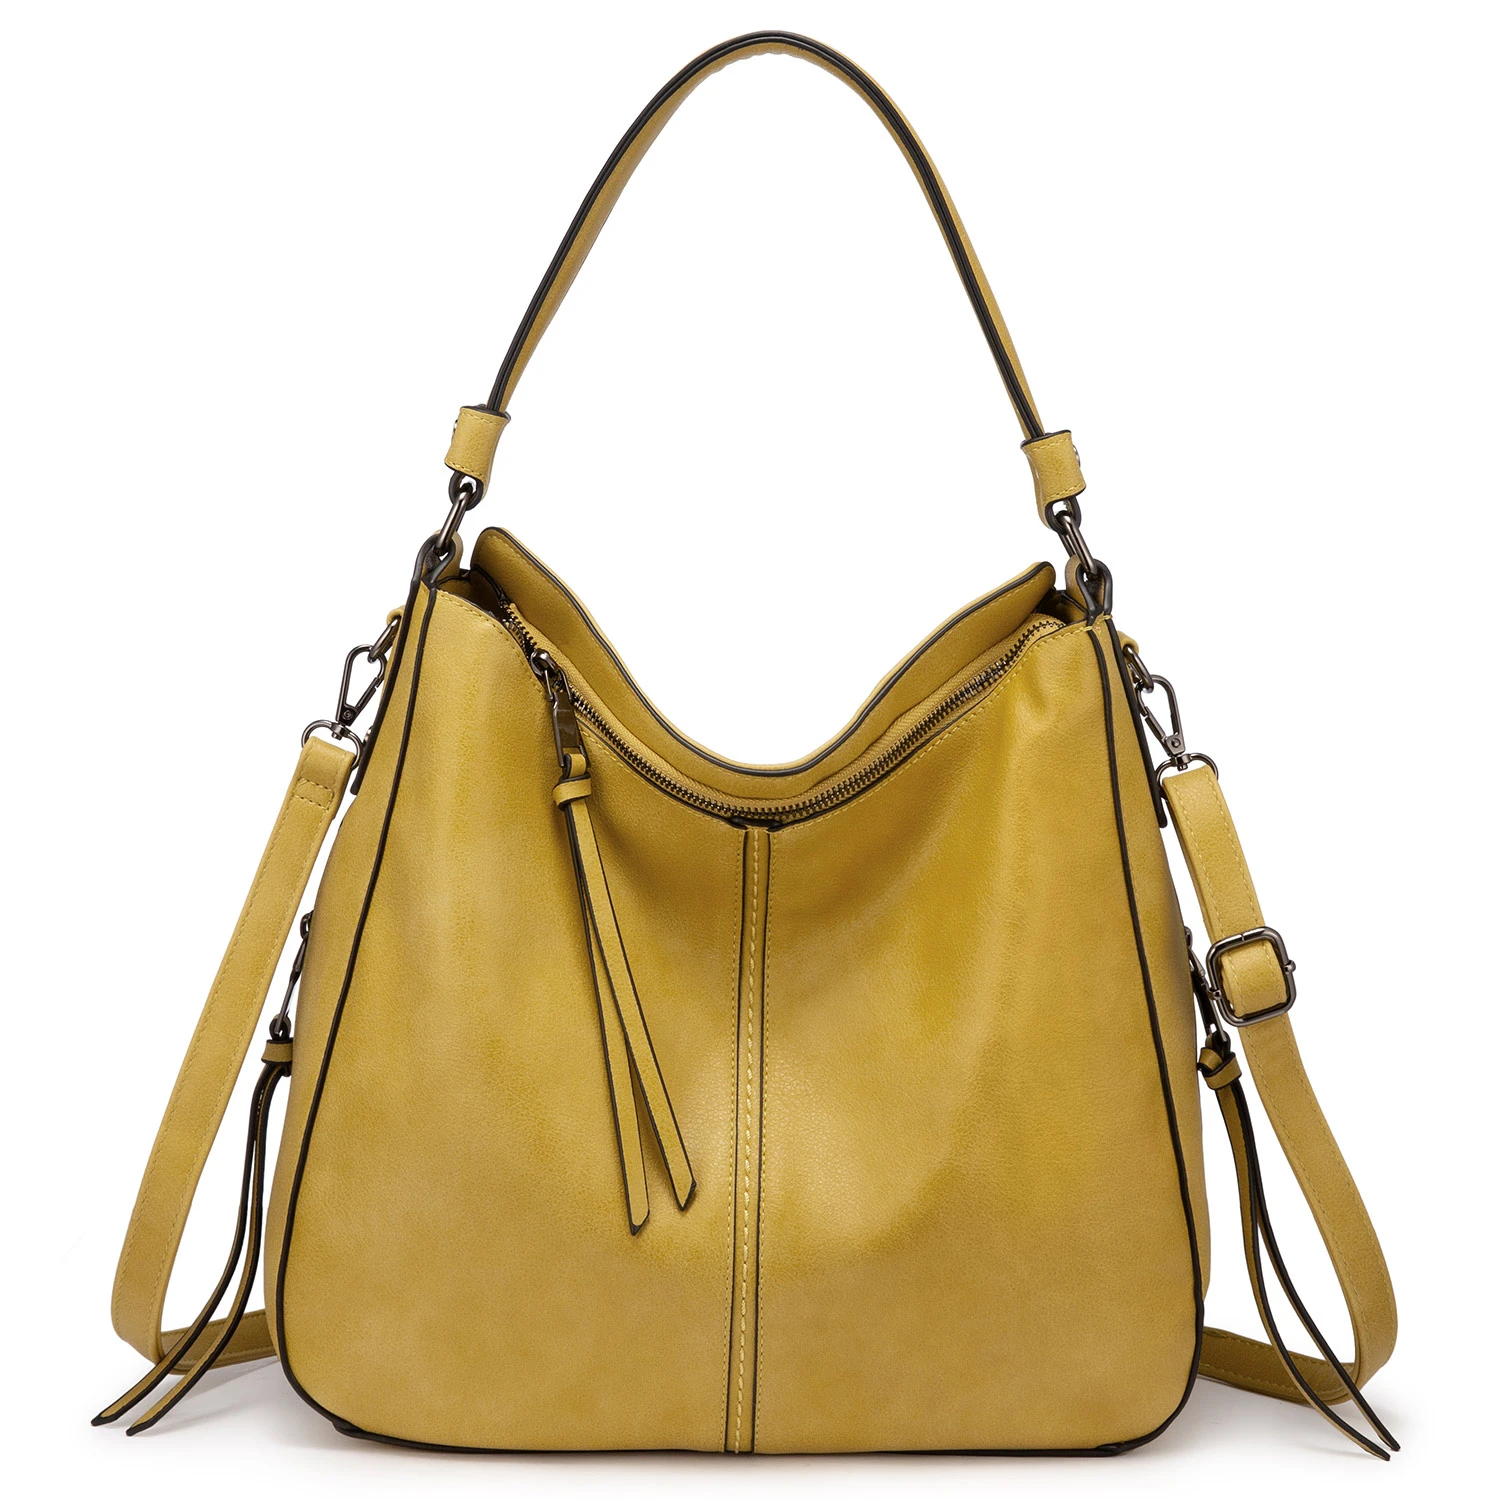 LOVEVOOK AMAZON hot sale women bag fashion ladies handbag with rich colors